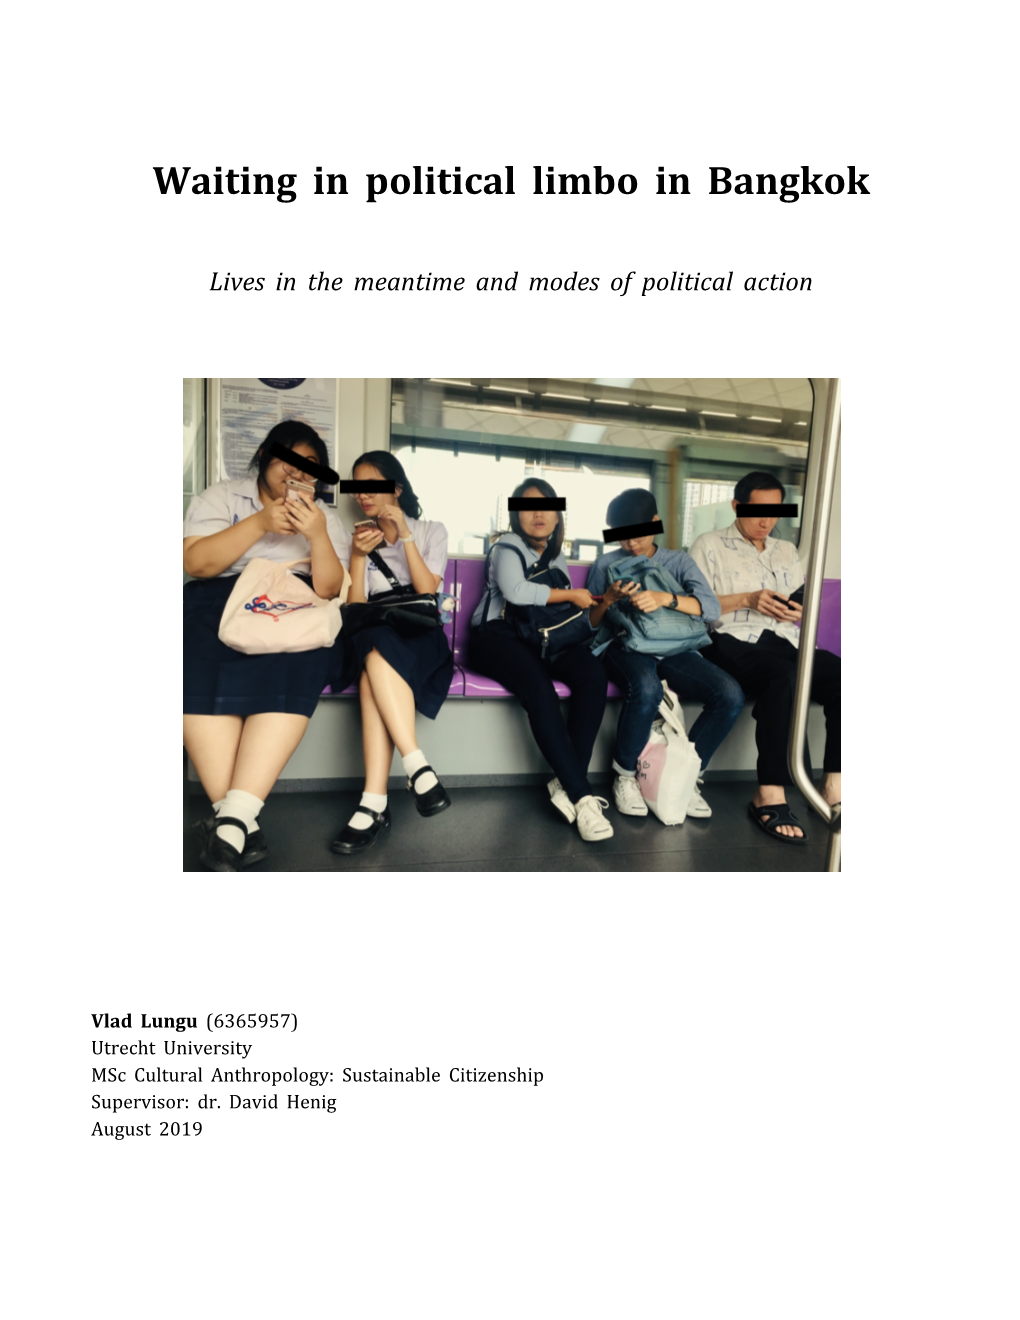 Waiting in Political Limbo in Bangkok